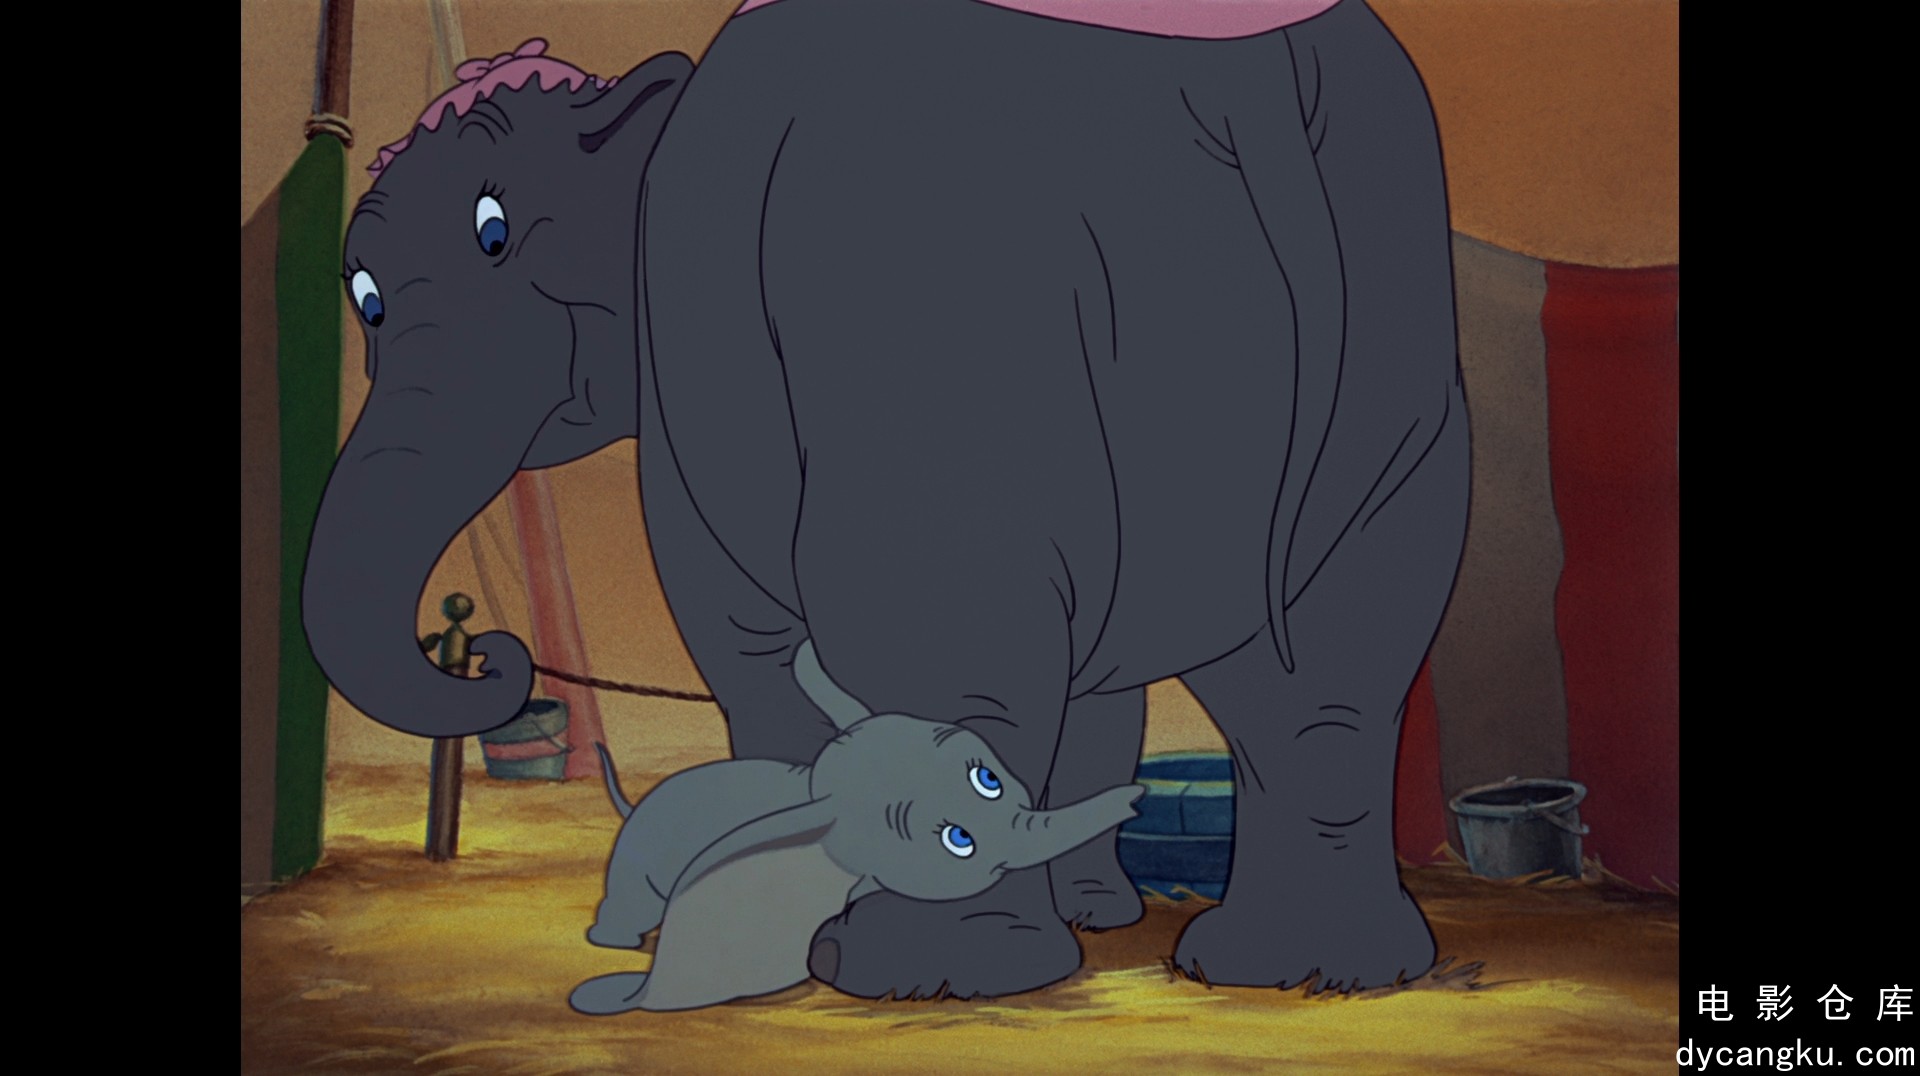 [电影仓库dycangku.com]Dumbo.1941.1080p.BluRay.DTS.x264-RUXi.mkv_snapshot_00.17.56.139.jpg